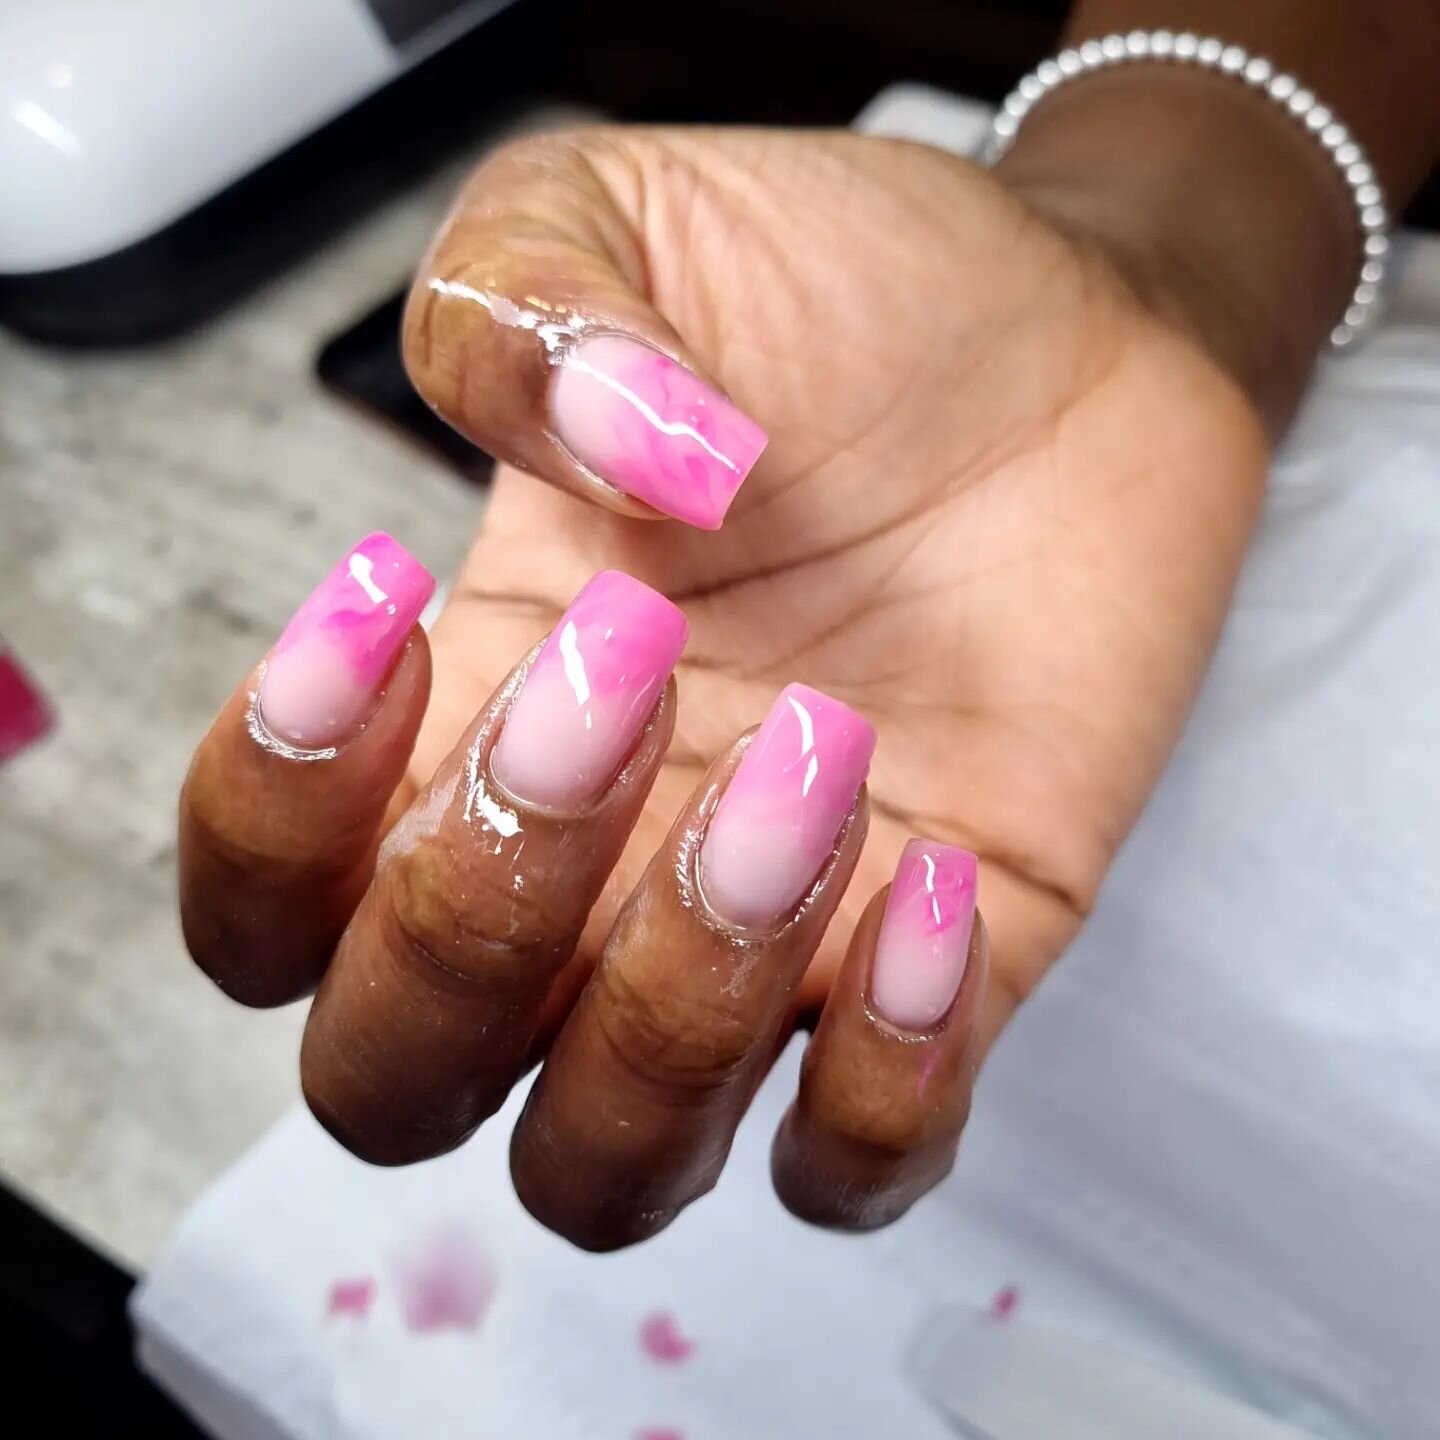 #marbleeffect #marblenails #pinkmarblenails #nailsofinstagram #nails #nailsofinstagram #nailstagram #nailsart #nailsdesign #nailstyle #nailsnailsnails #nailslondon #nailslondon💅